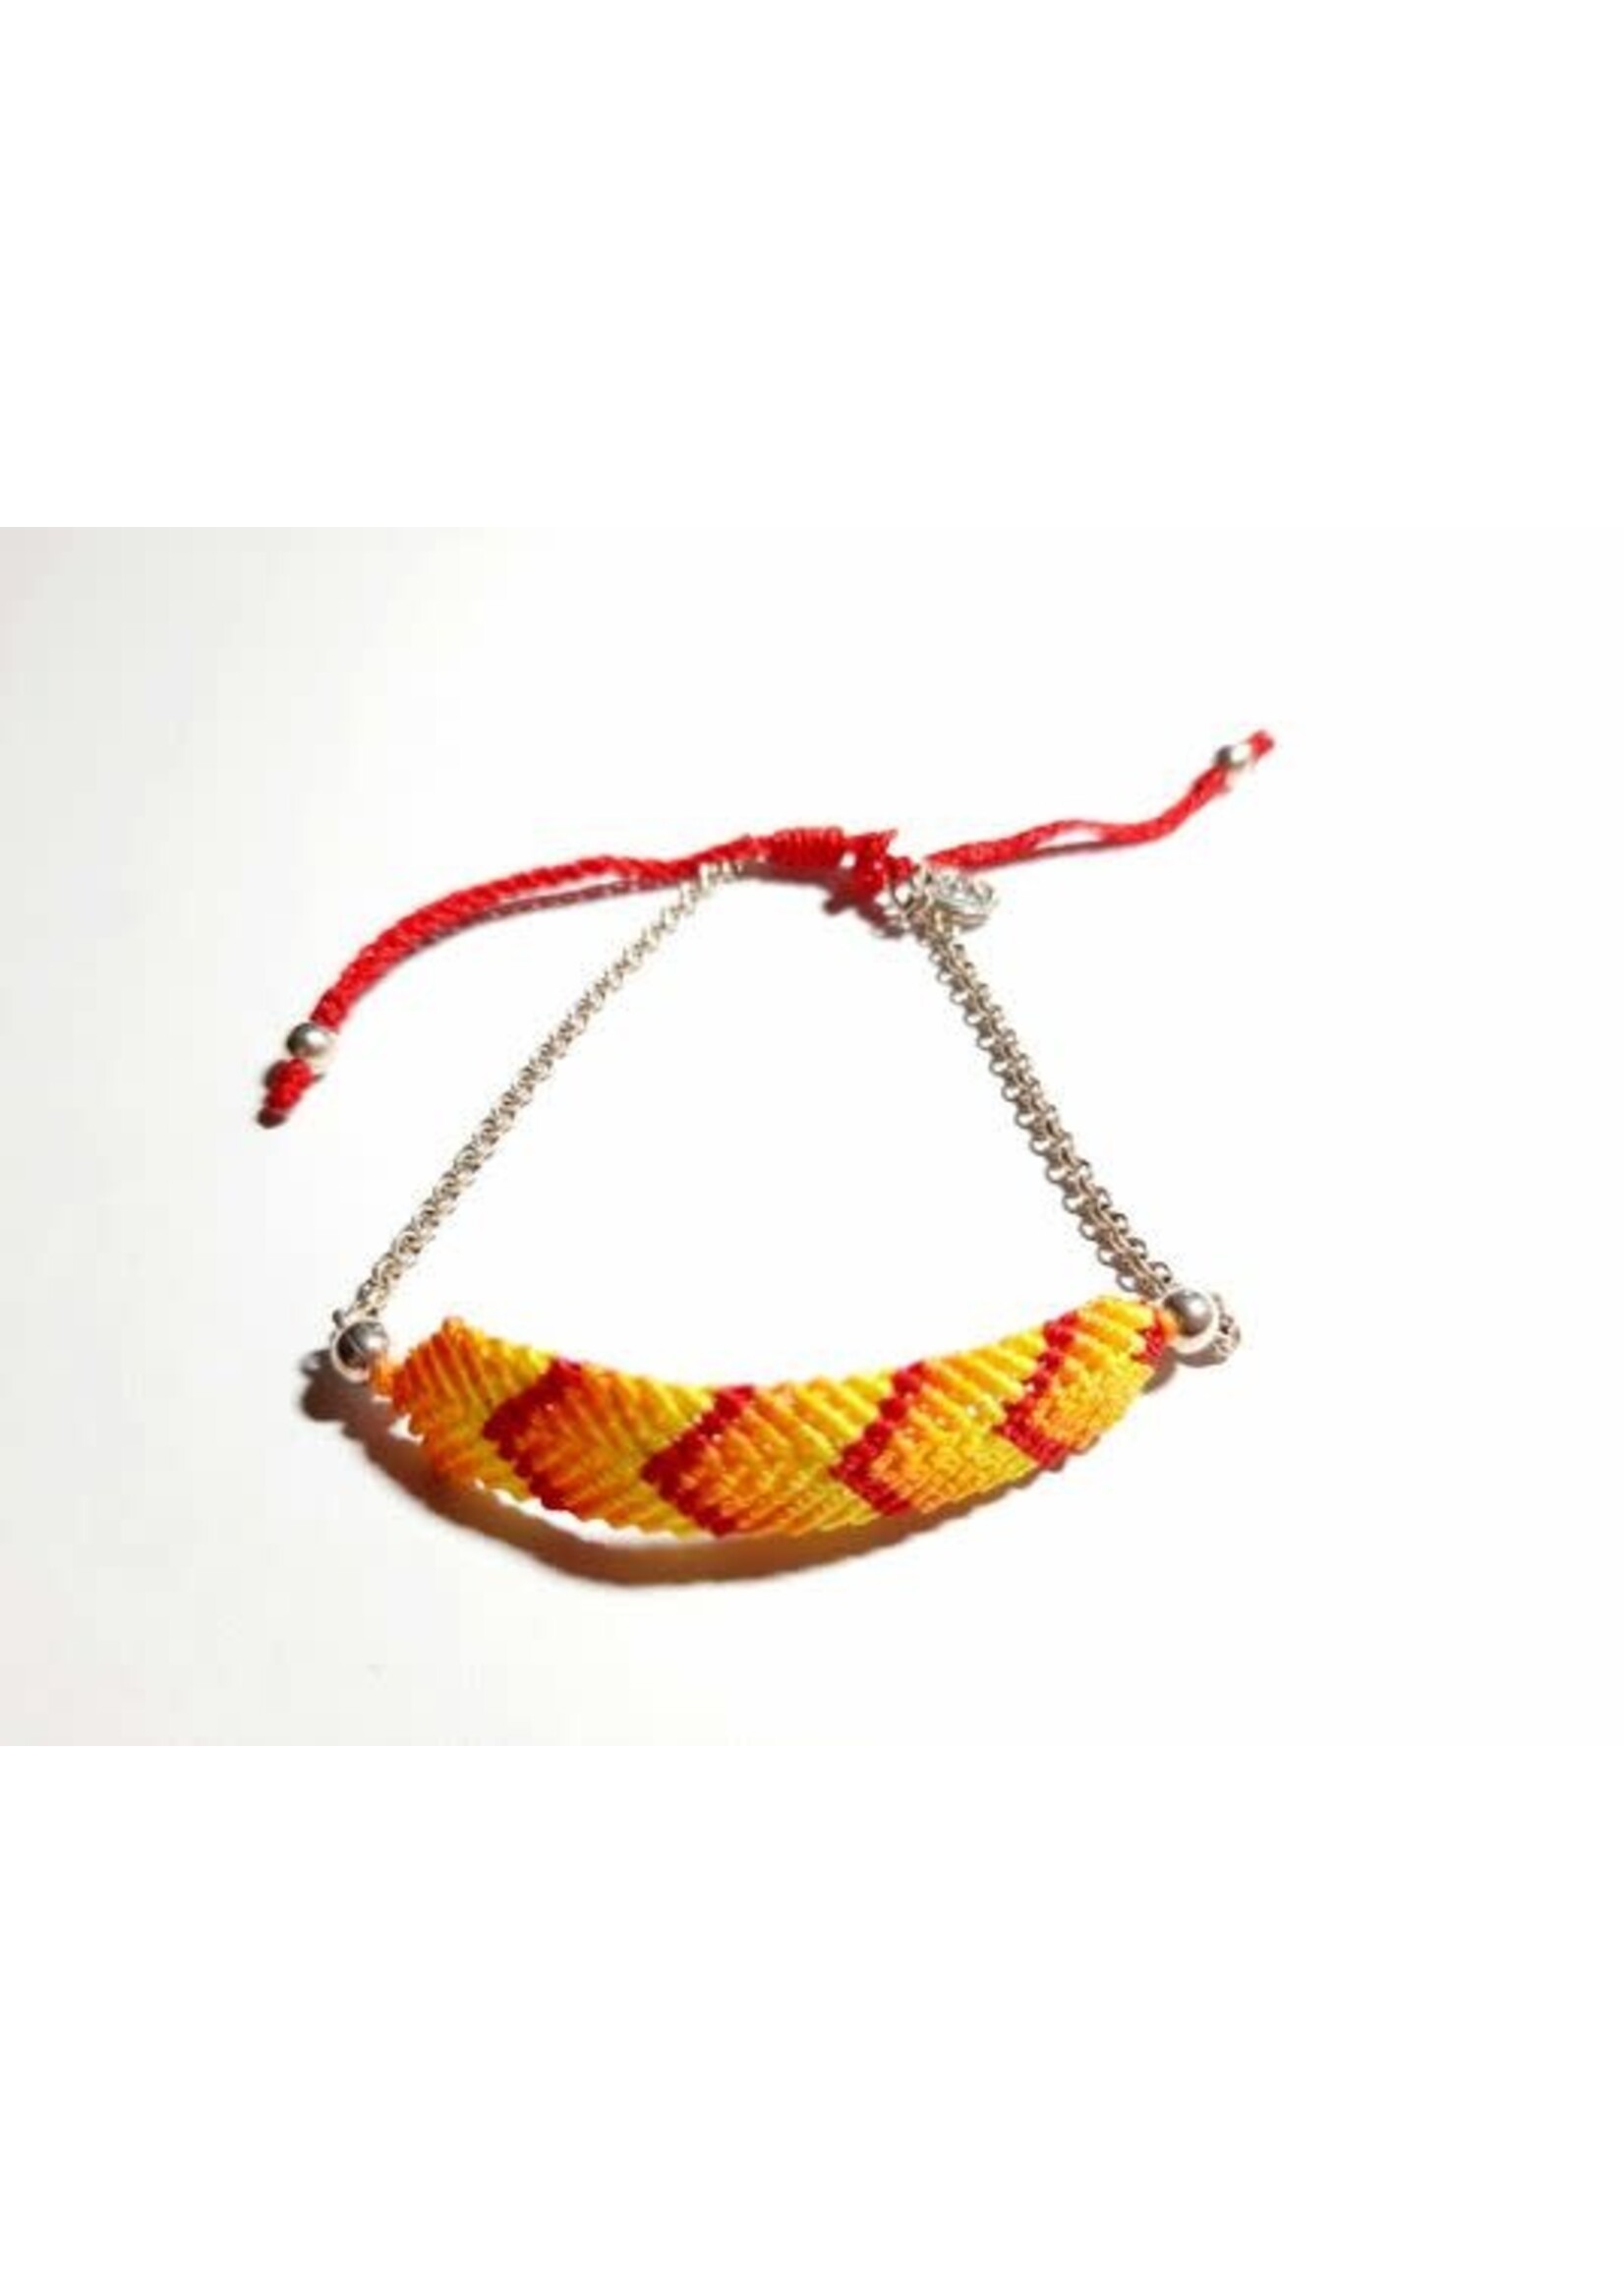 Barong Barong Barong Barong armband met schuifknoop, jasseron en gekleurd ornament